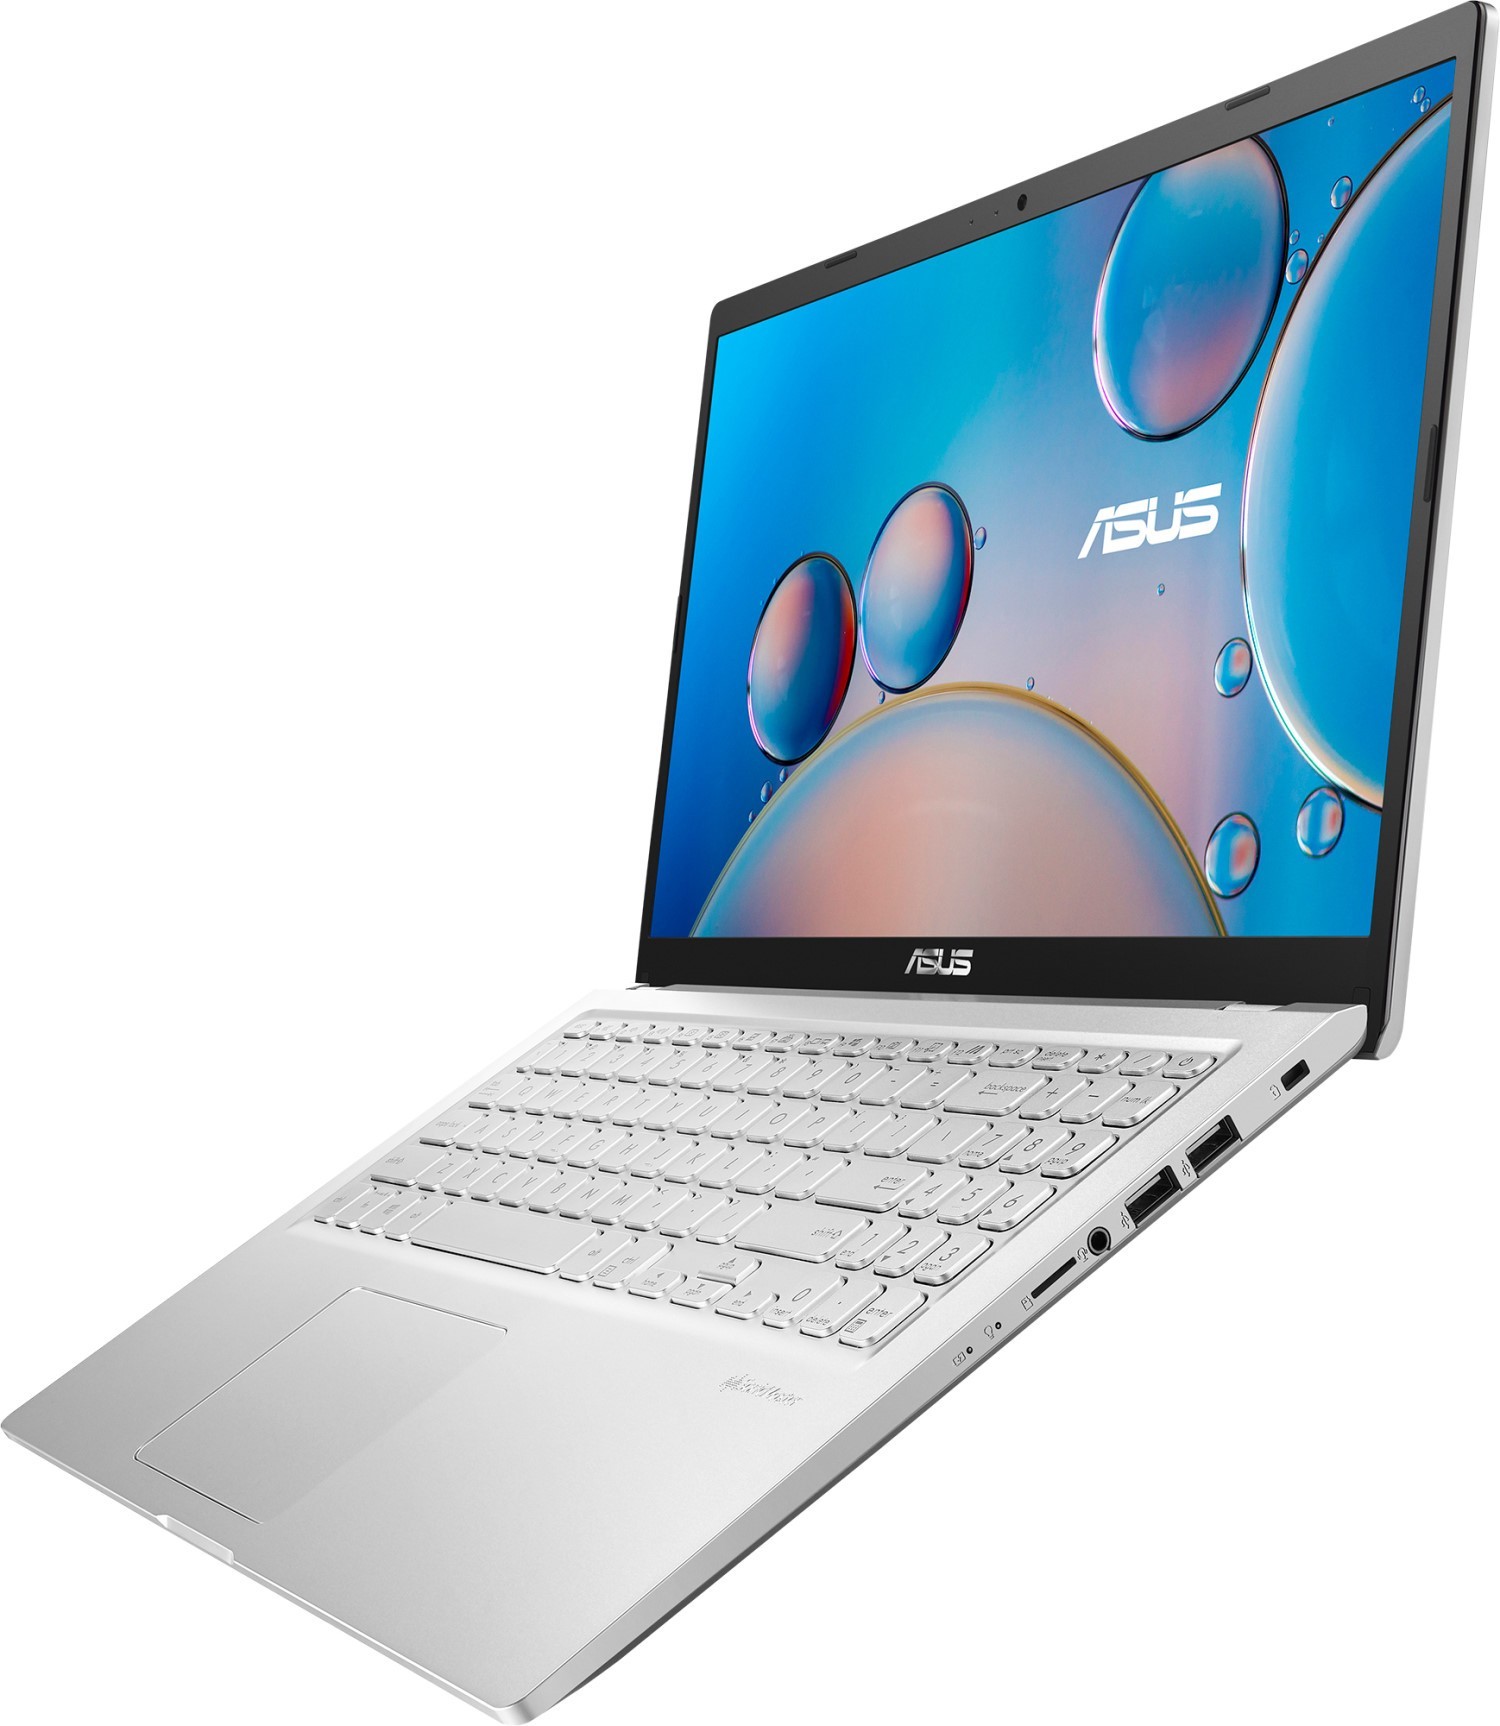 Ноутбук Asus Laptop F515ja Ej672t Купить